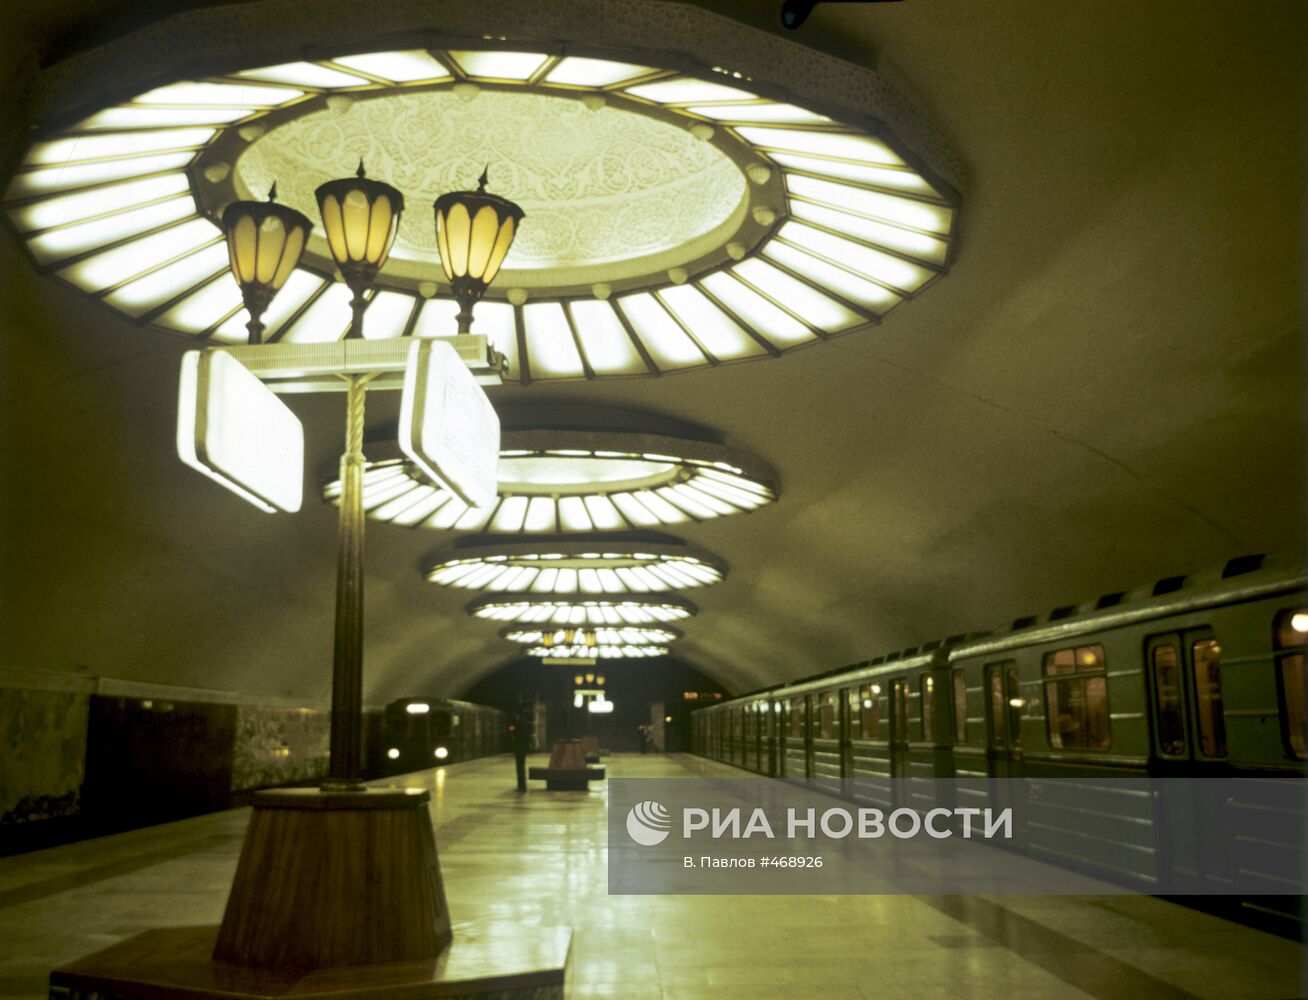 Станция "Площадь Ленина"